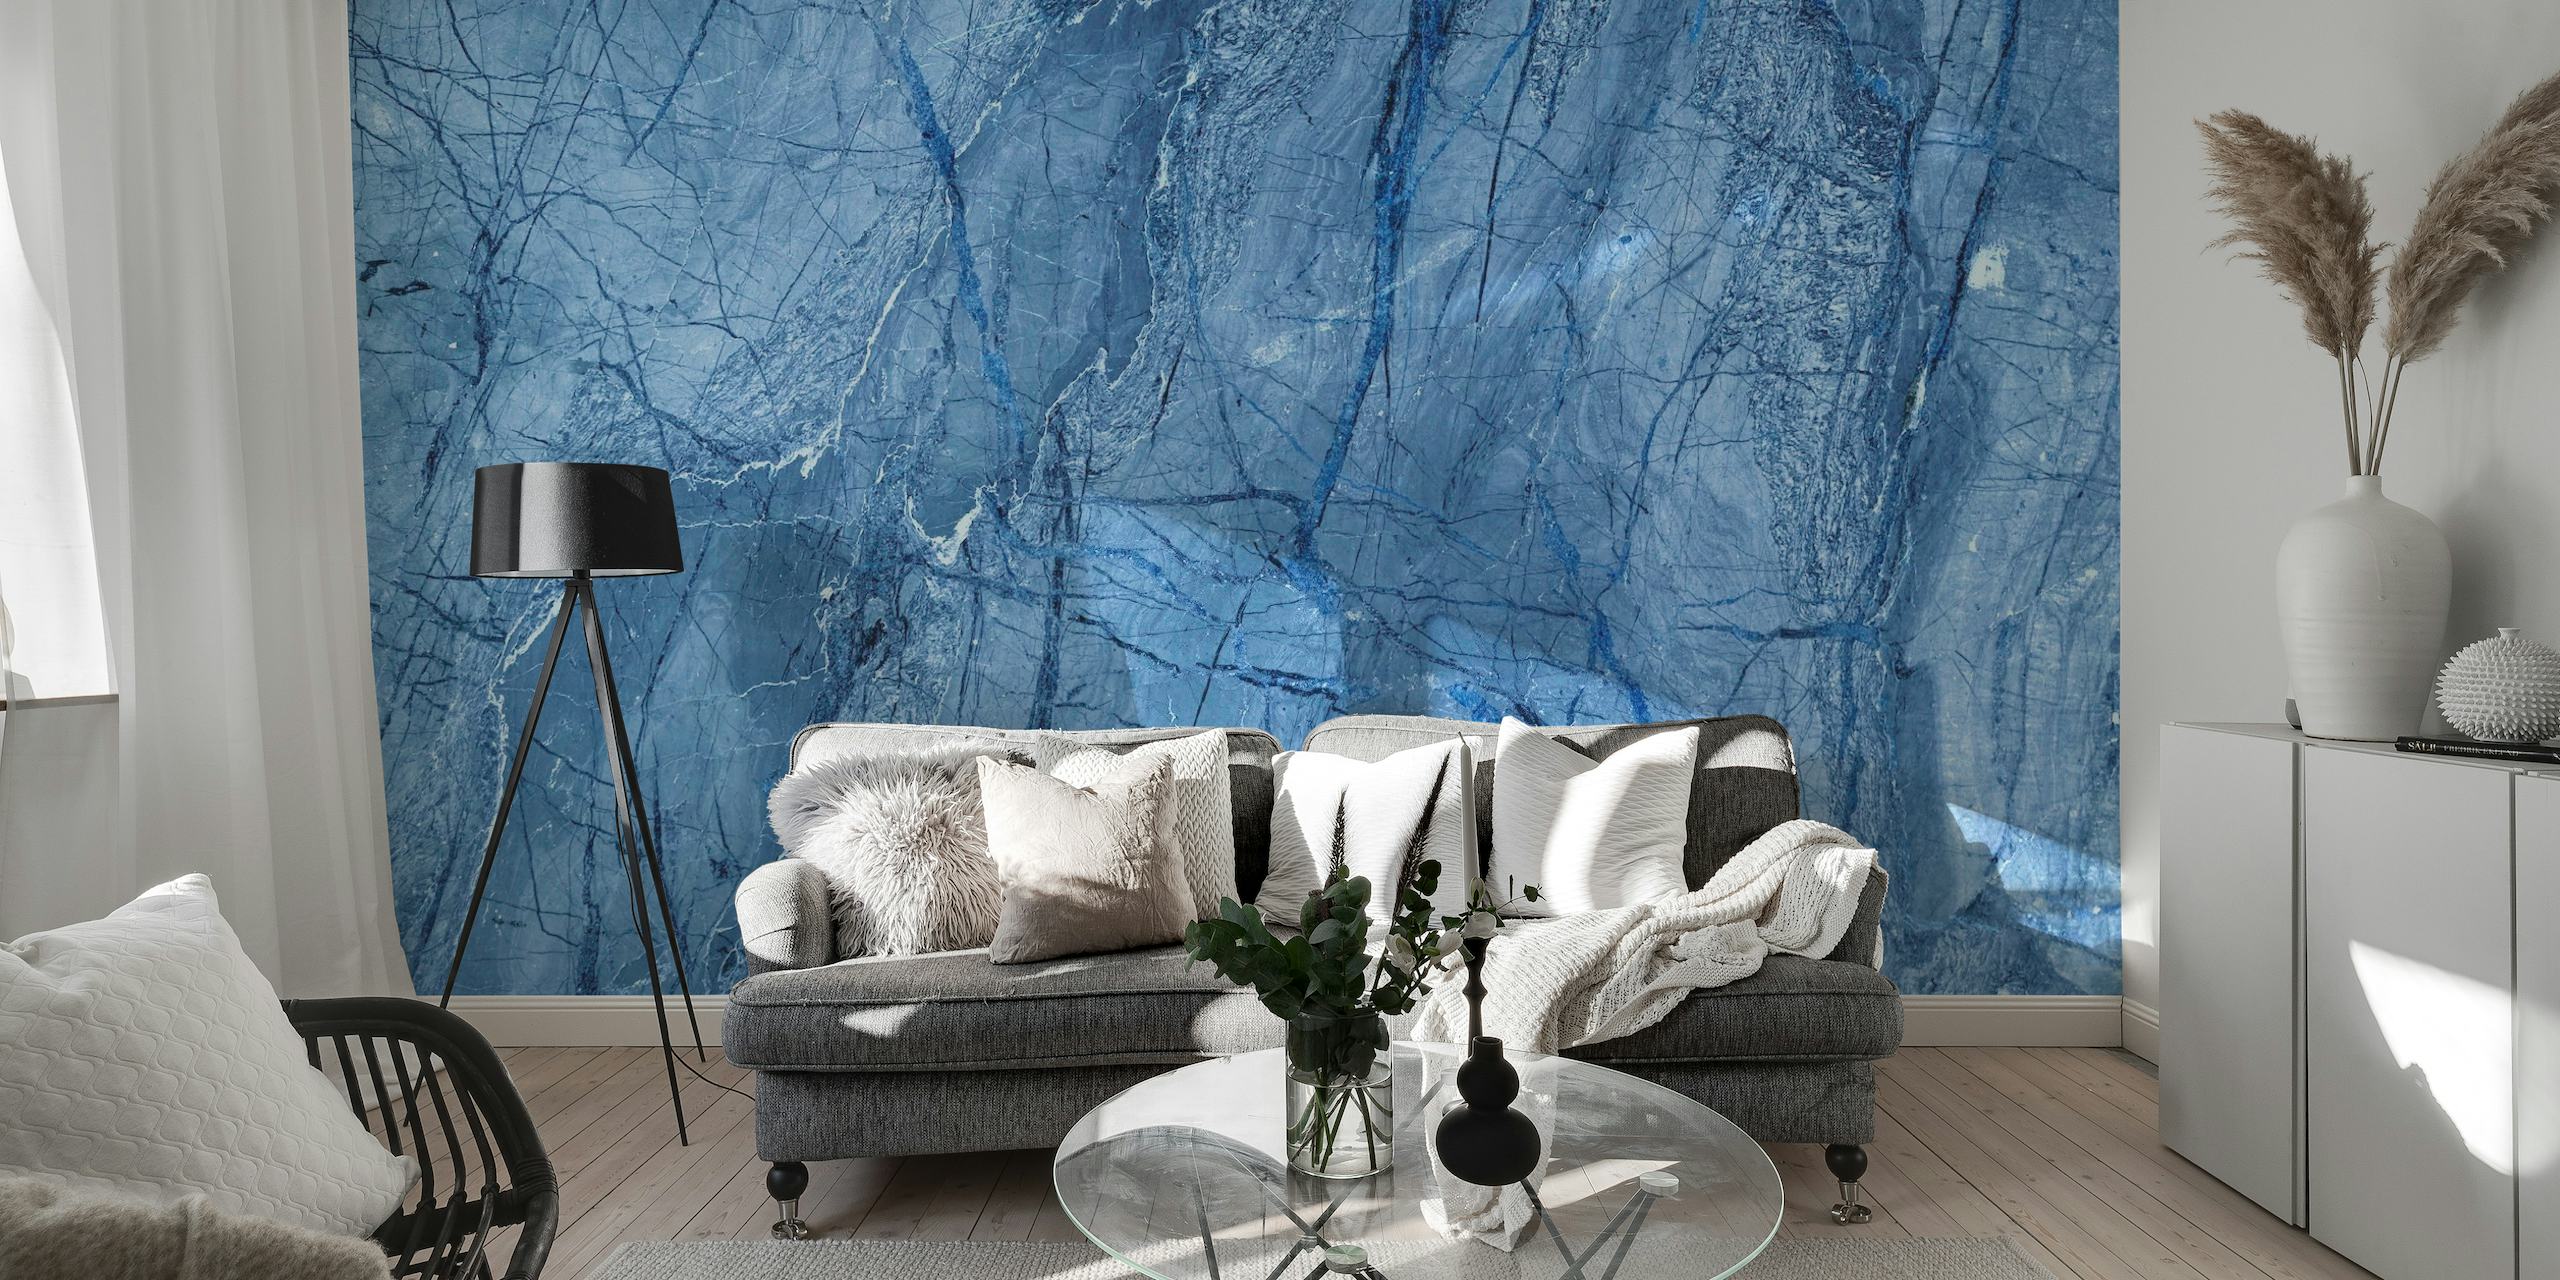 Fototapeta s tmavě modrou texturou mramoru pro výzdobu interiéru